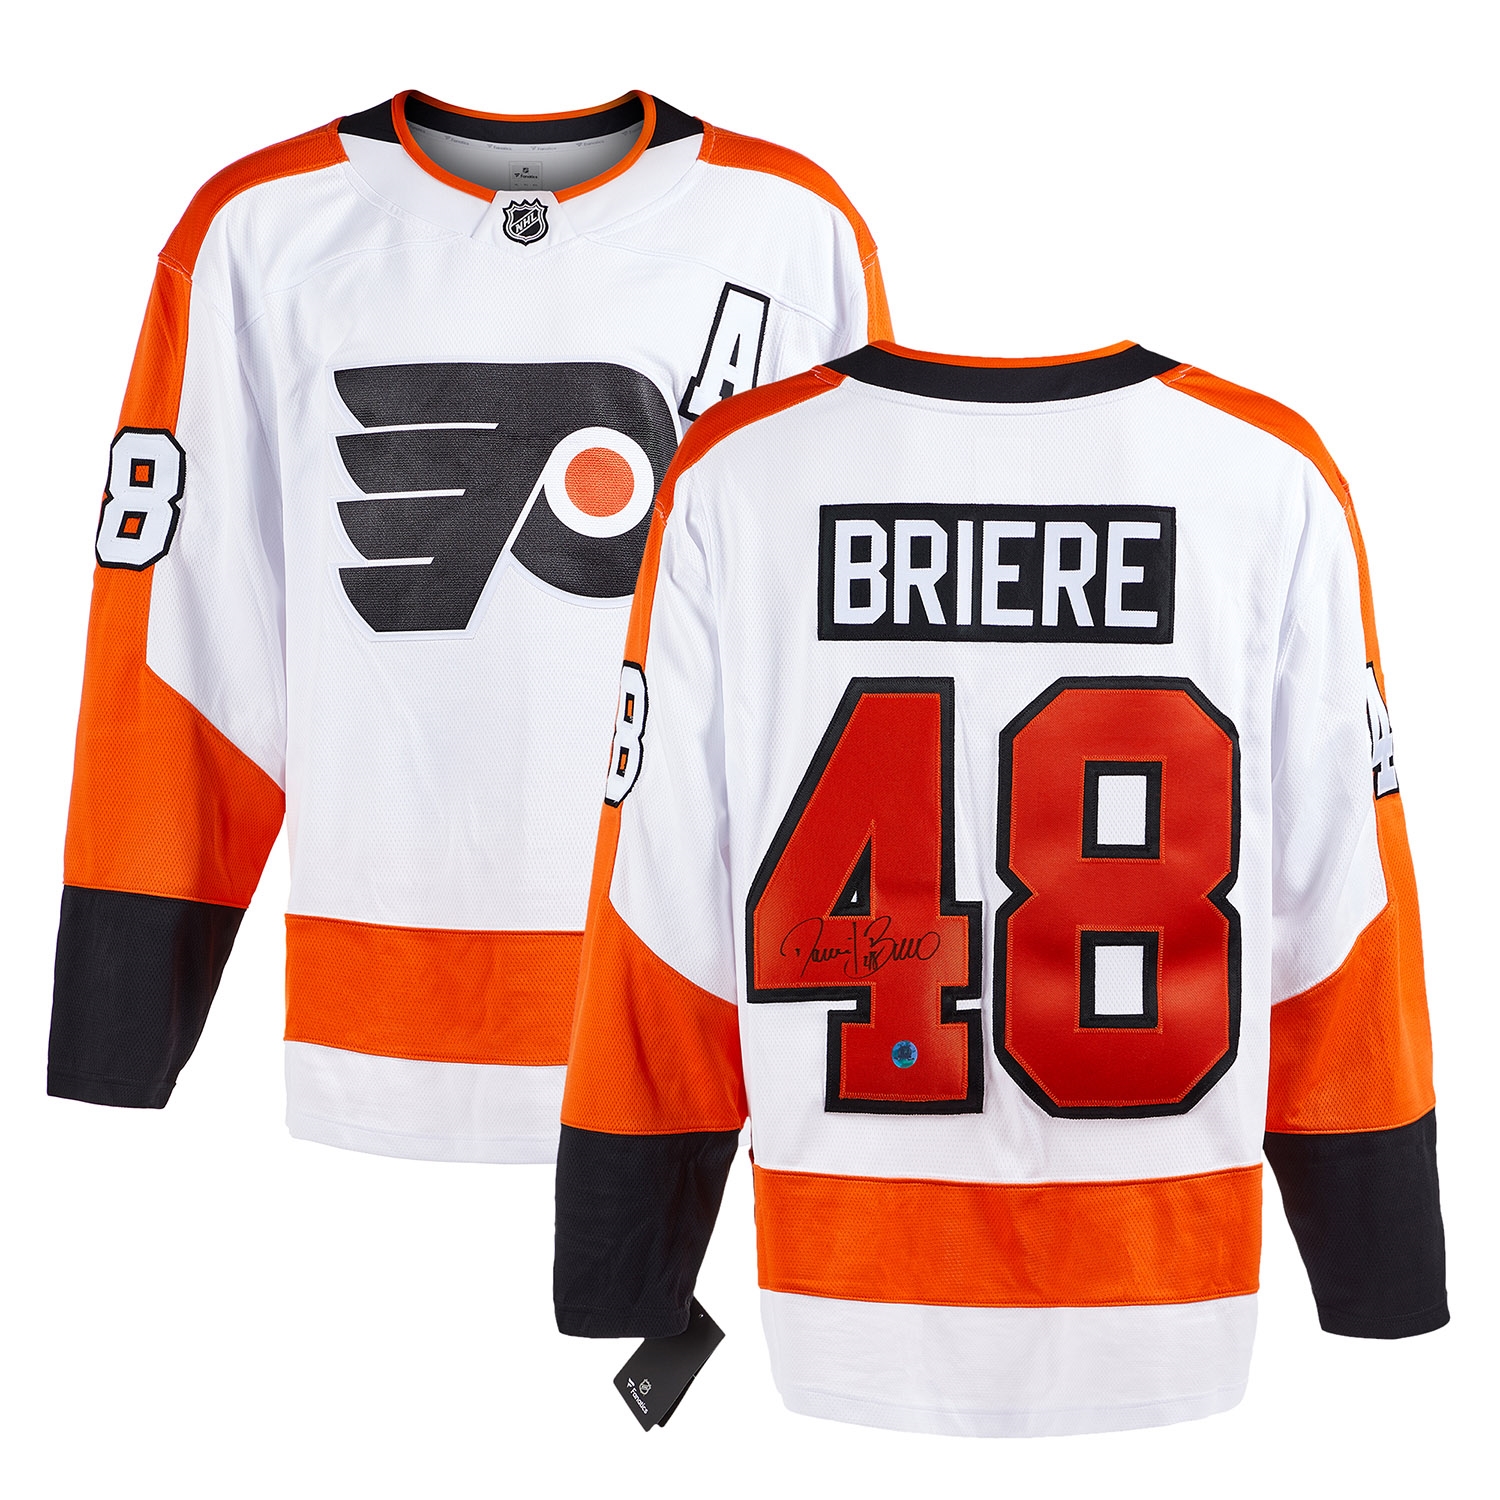 Daniel Briere Philadelphia Flyers Signed White Fanatics Jersey